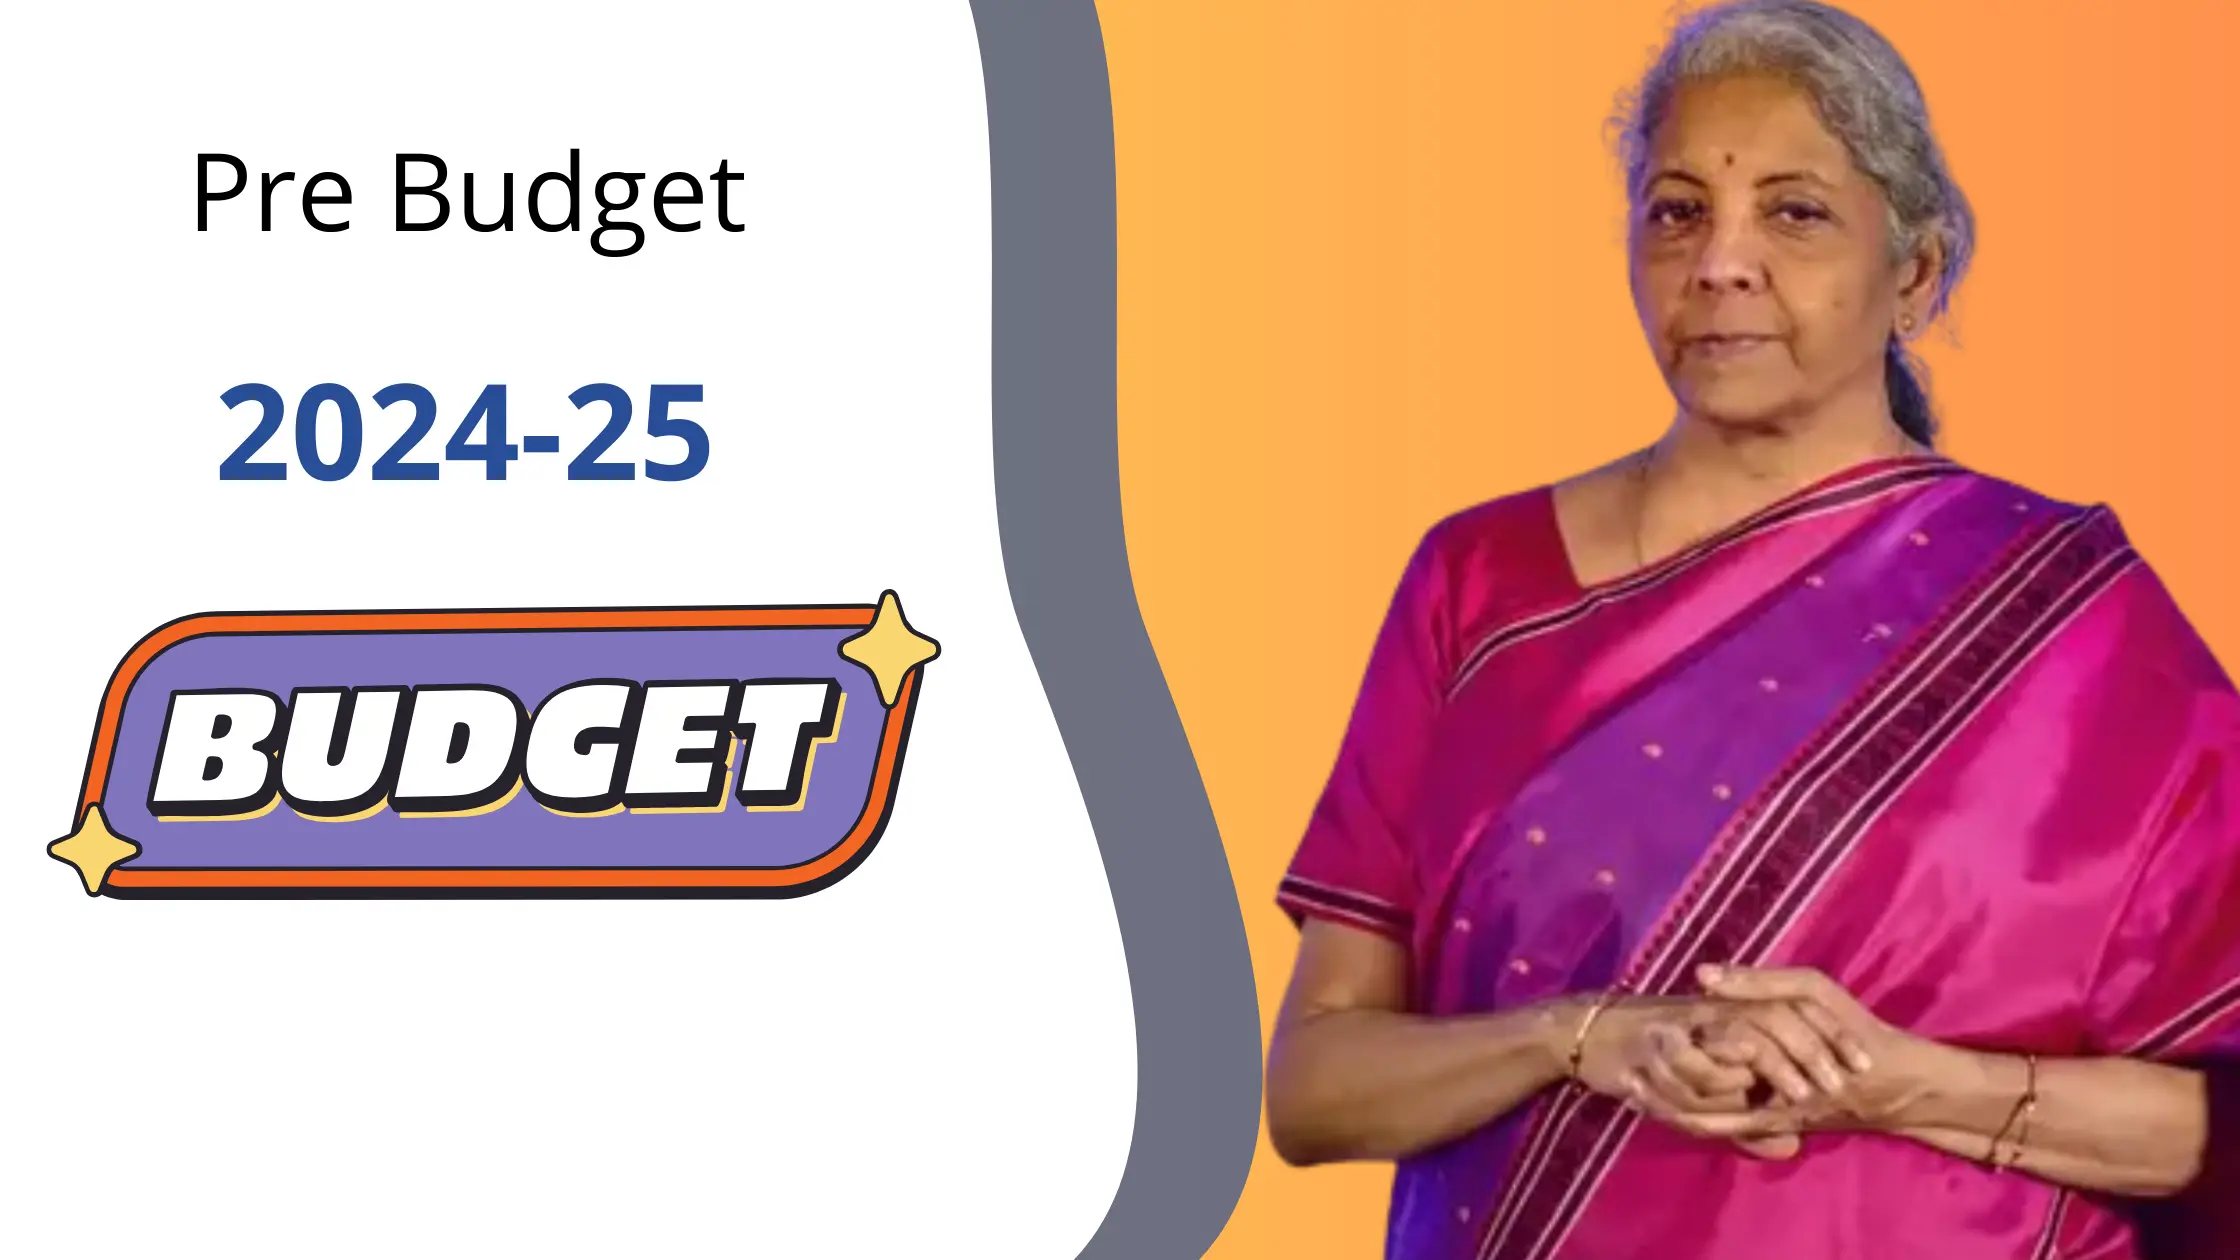 Countdown to Budget 2024-25: Finance Minister Nirmala Sitharaman Kicks Off Pre-Budget Talks